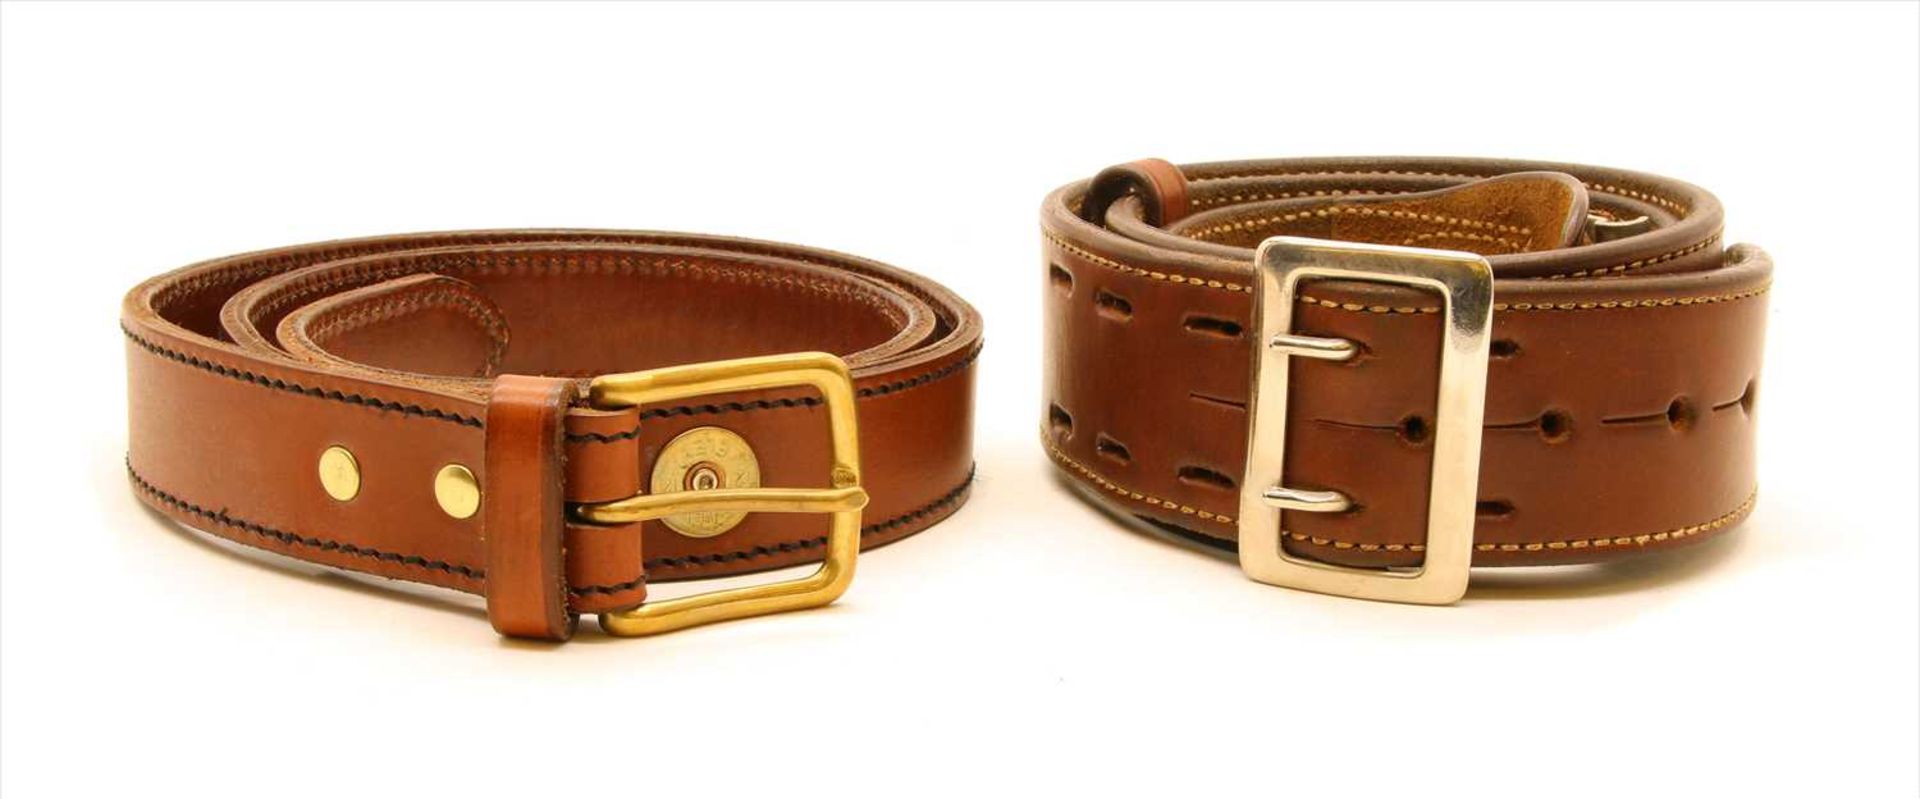 A gentleman's brown leather belt